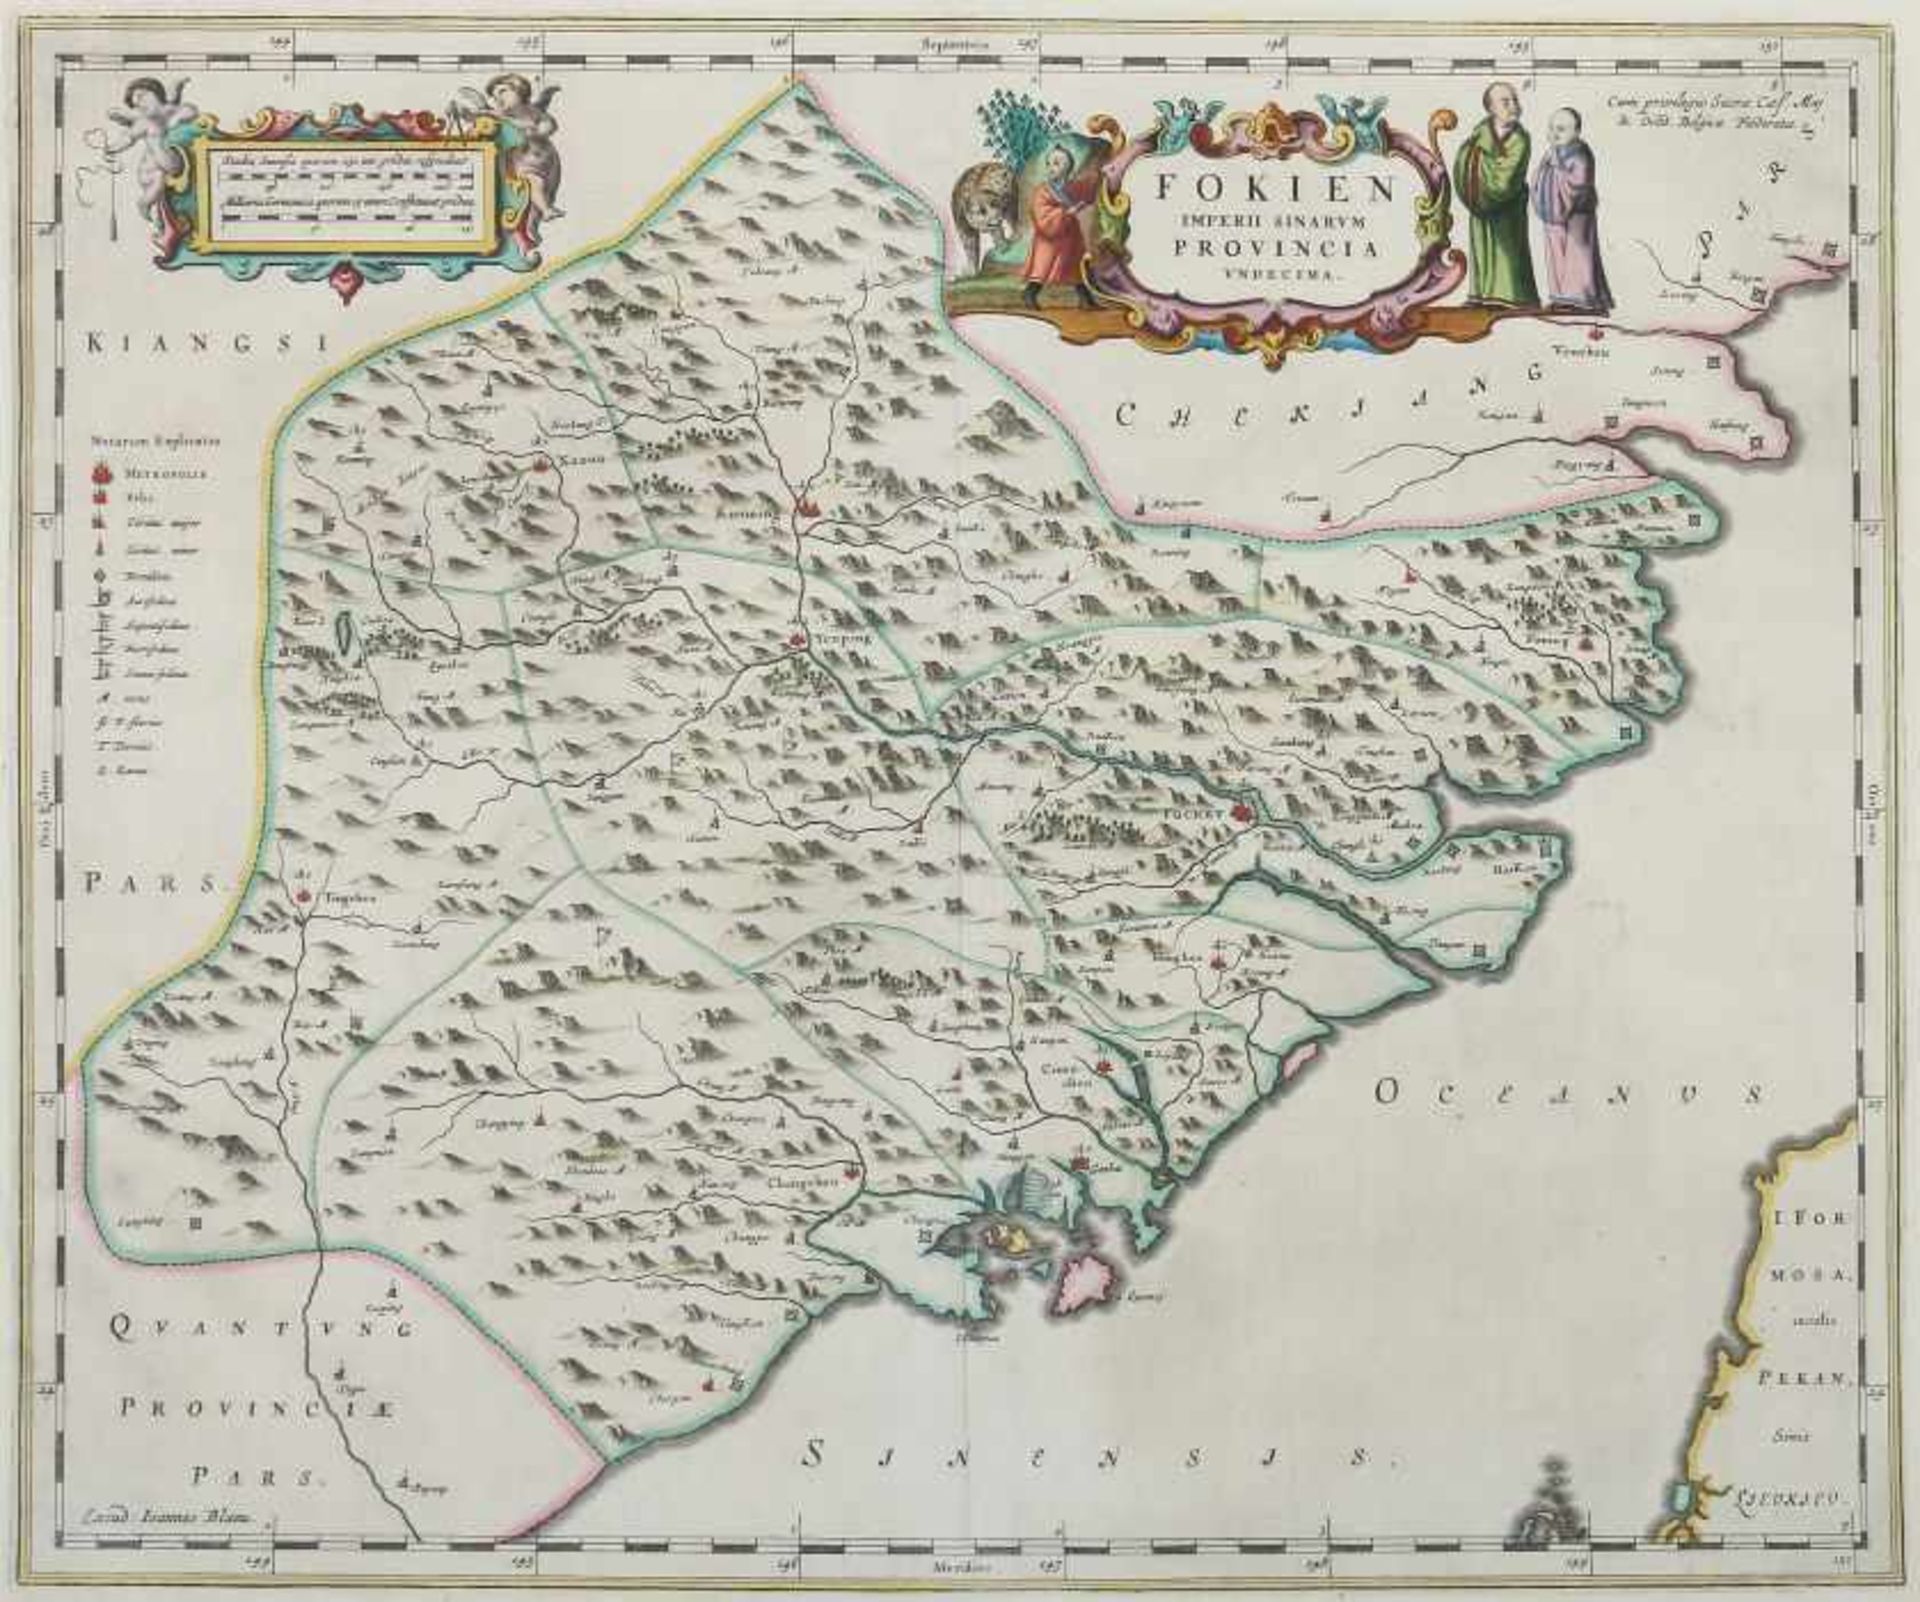 Blaeu, Joan 1599 - 1673. "Fokien, Imperii Sinarum, Provincia undecima", chinesische Provinz